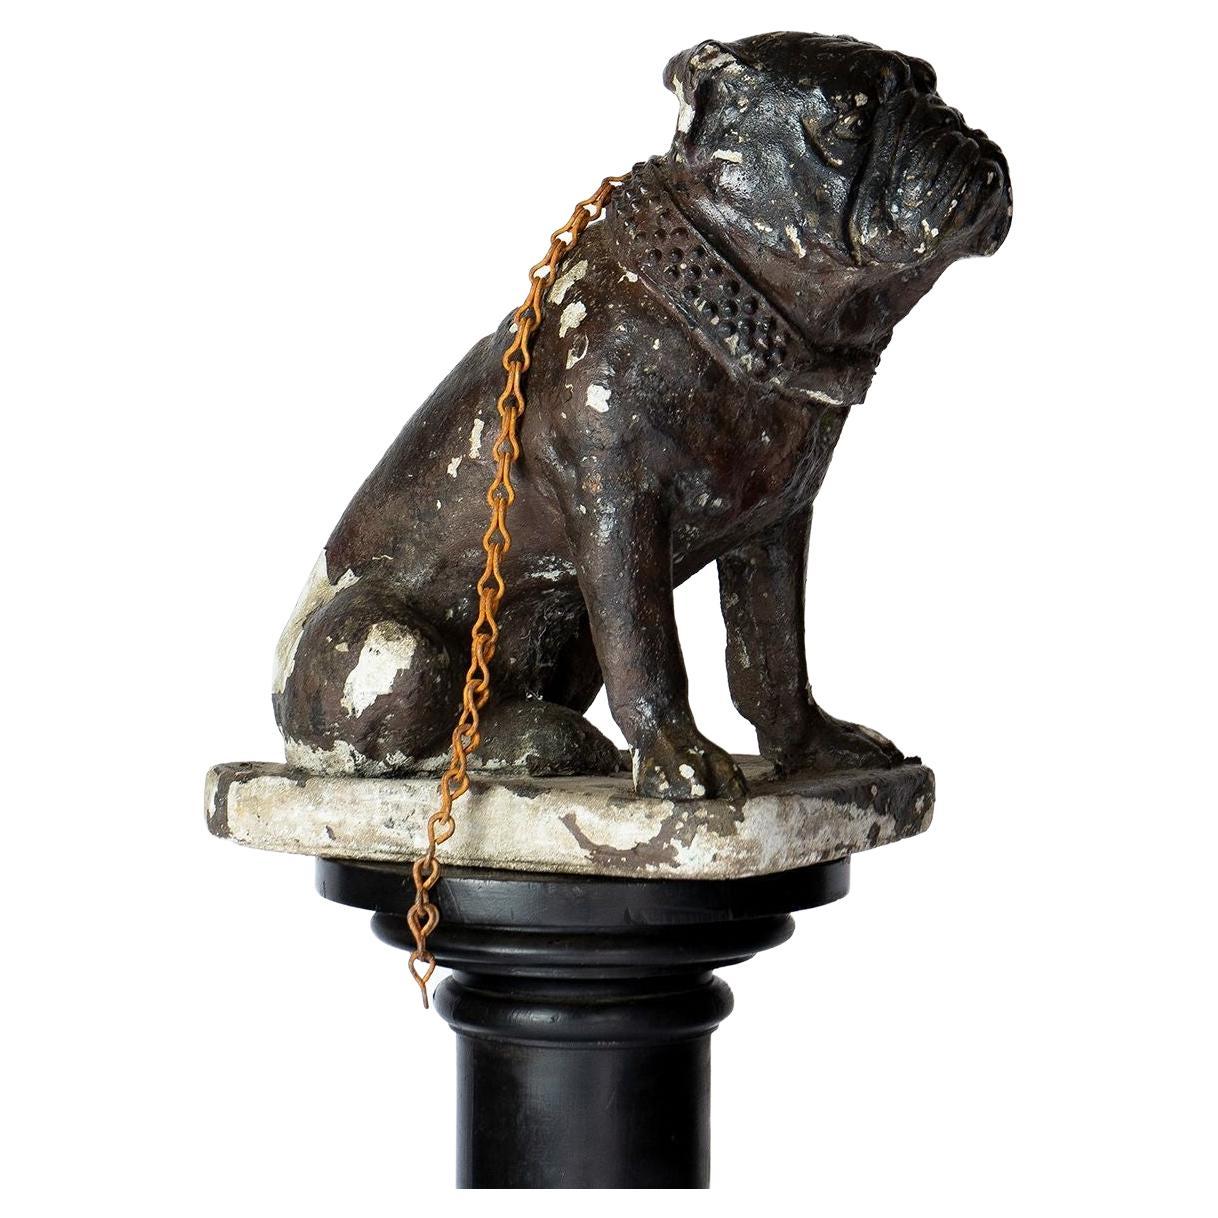 Vintage Reconstituted Stone English Bulldog Garden Statue Figure c. 1920s